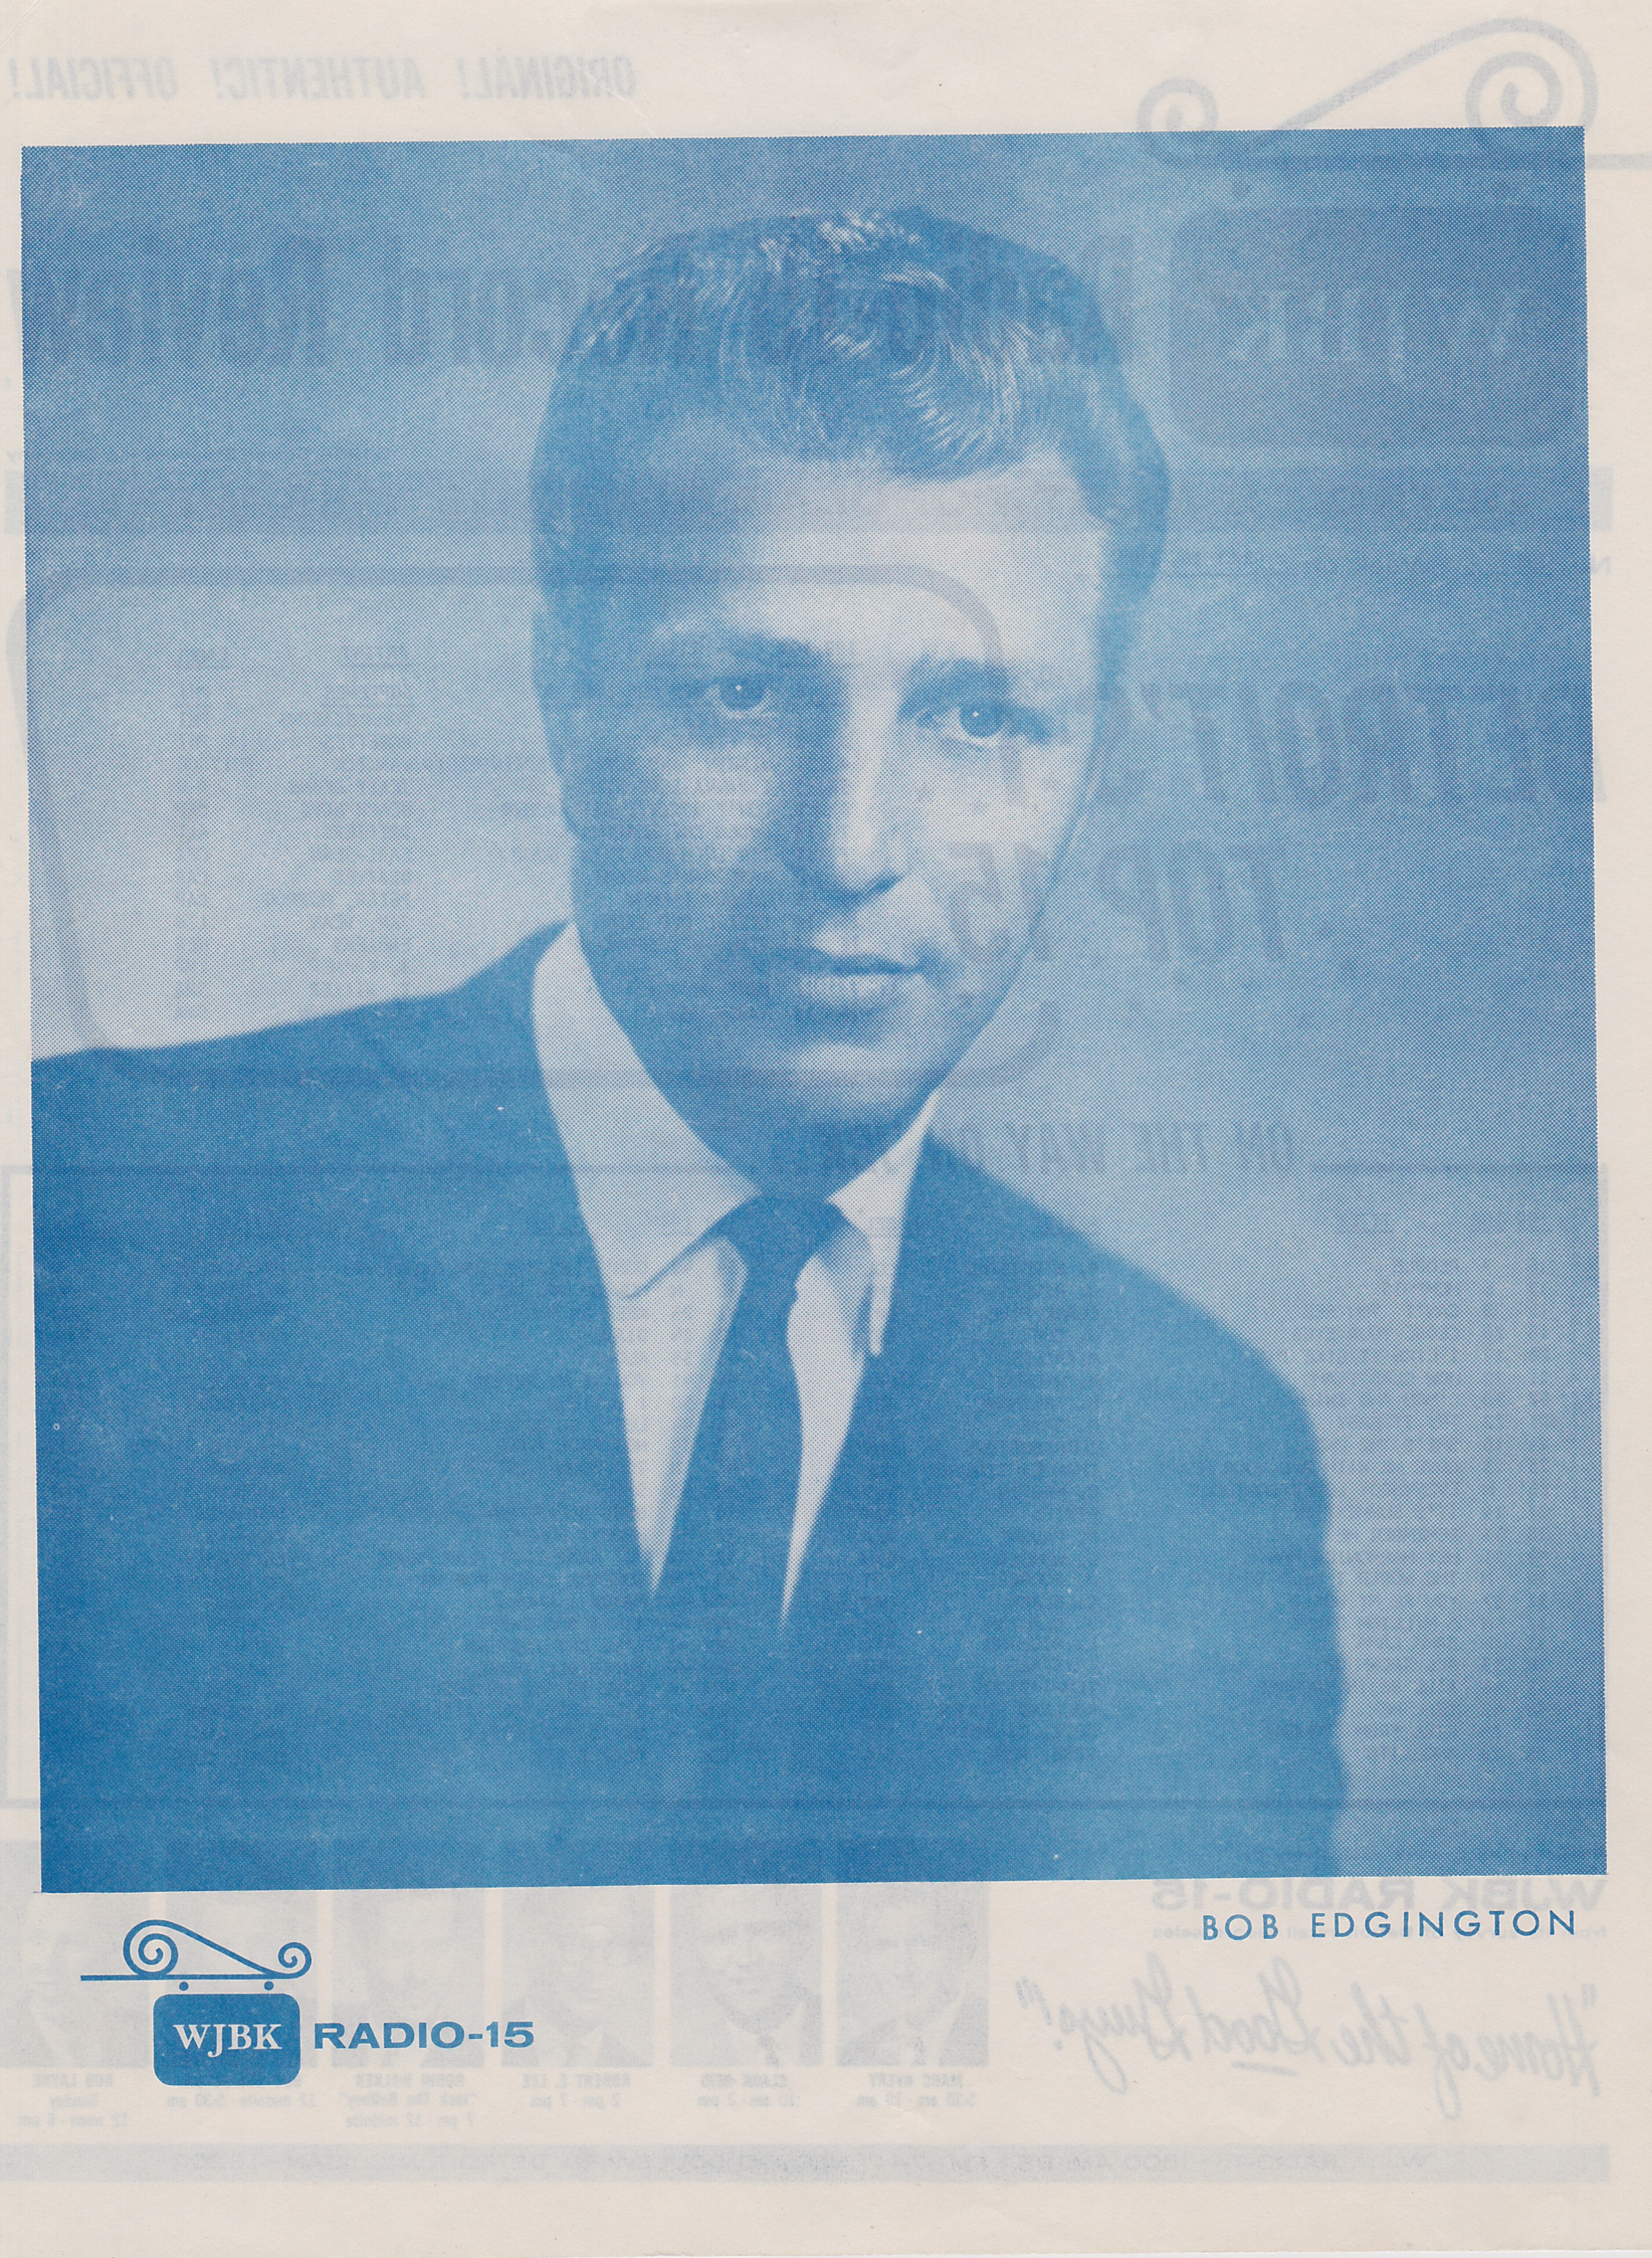 WJBK - BOB EDGINGTON - BACK JULY 10, 1964